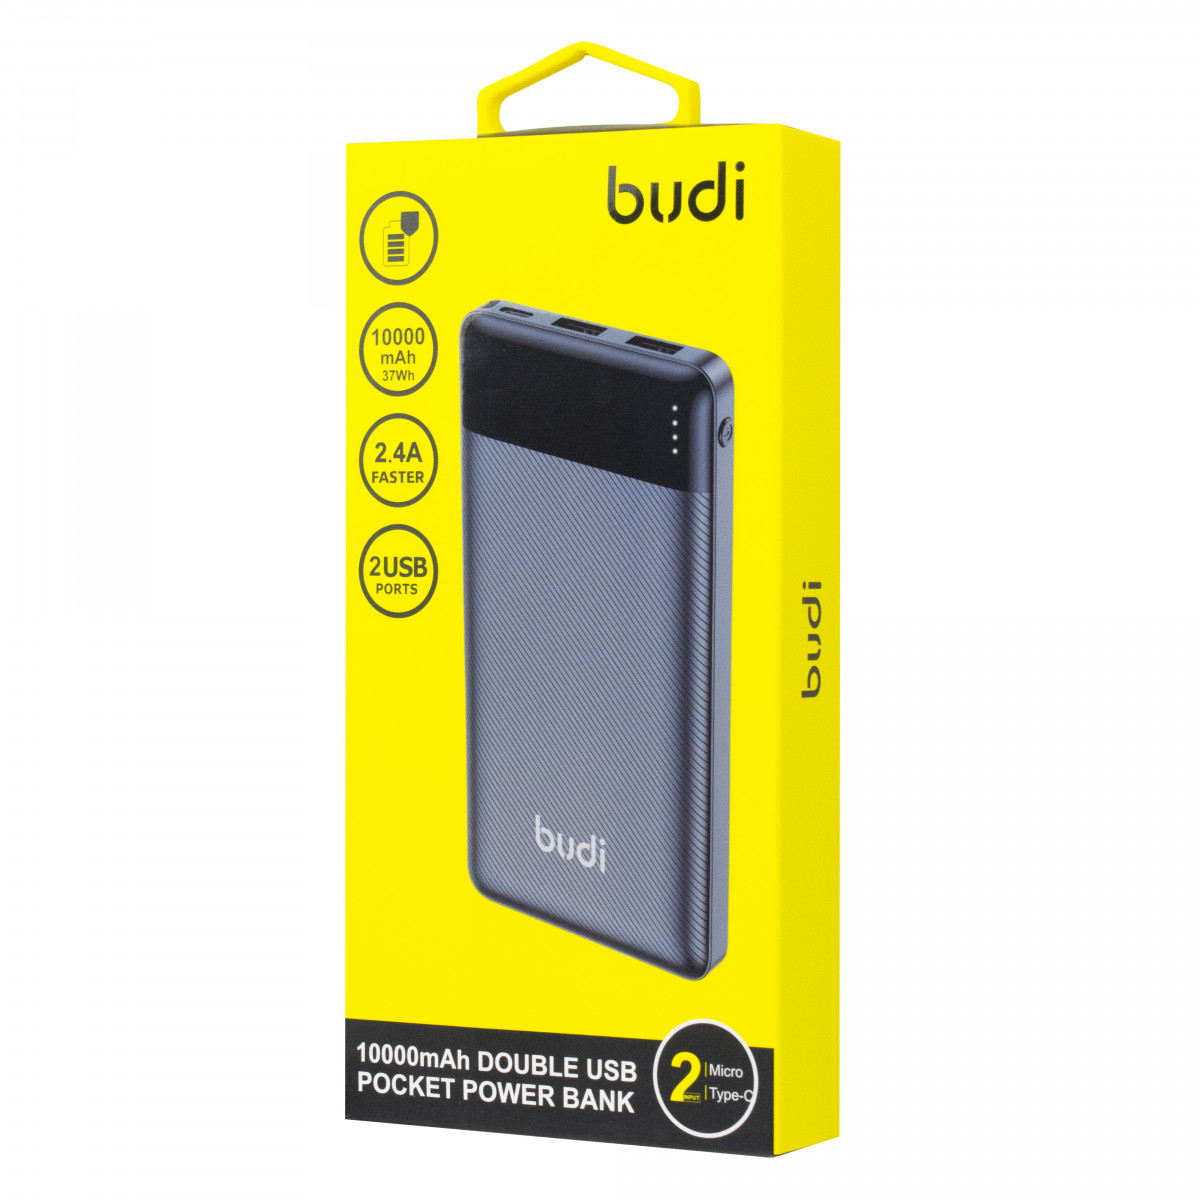 M8J095 - Budi Pocket Power Bank Double USB 10000 mAh